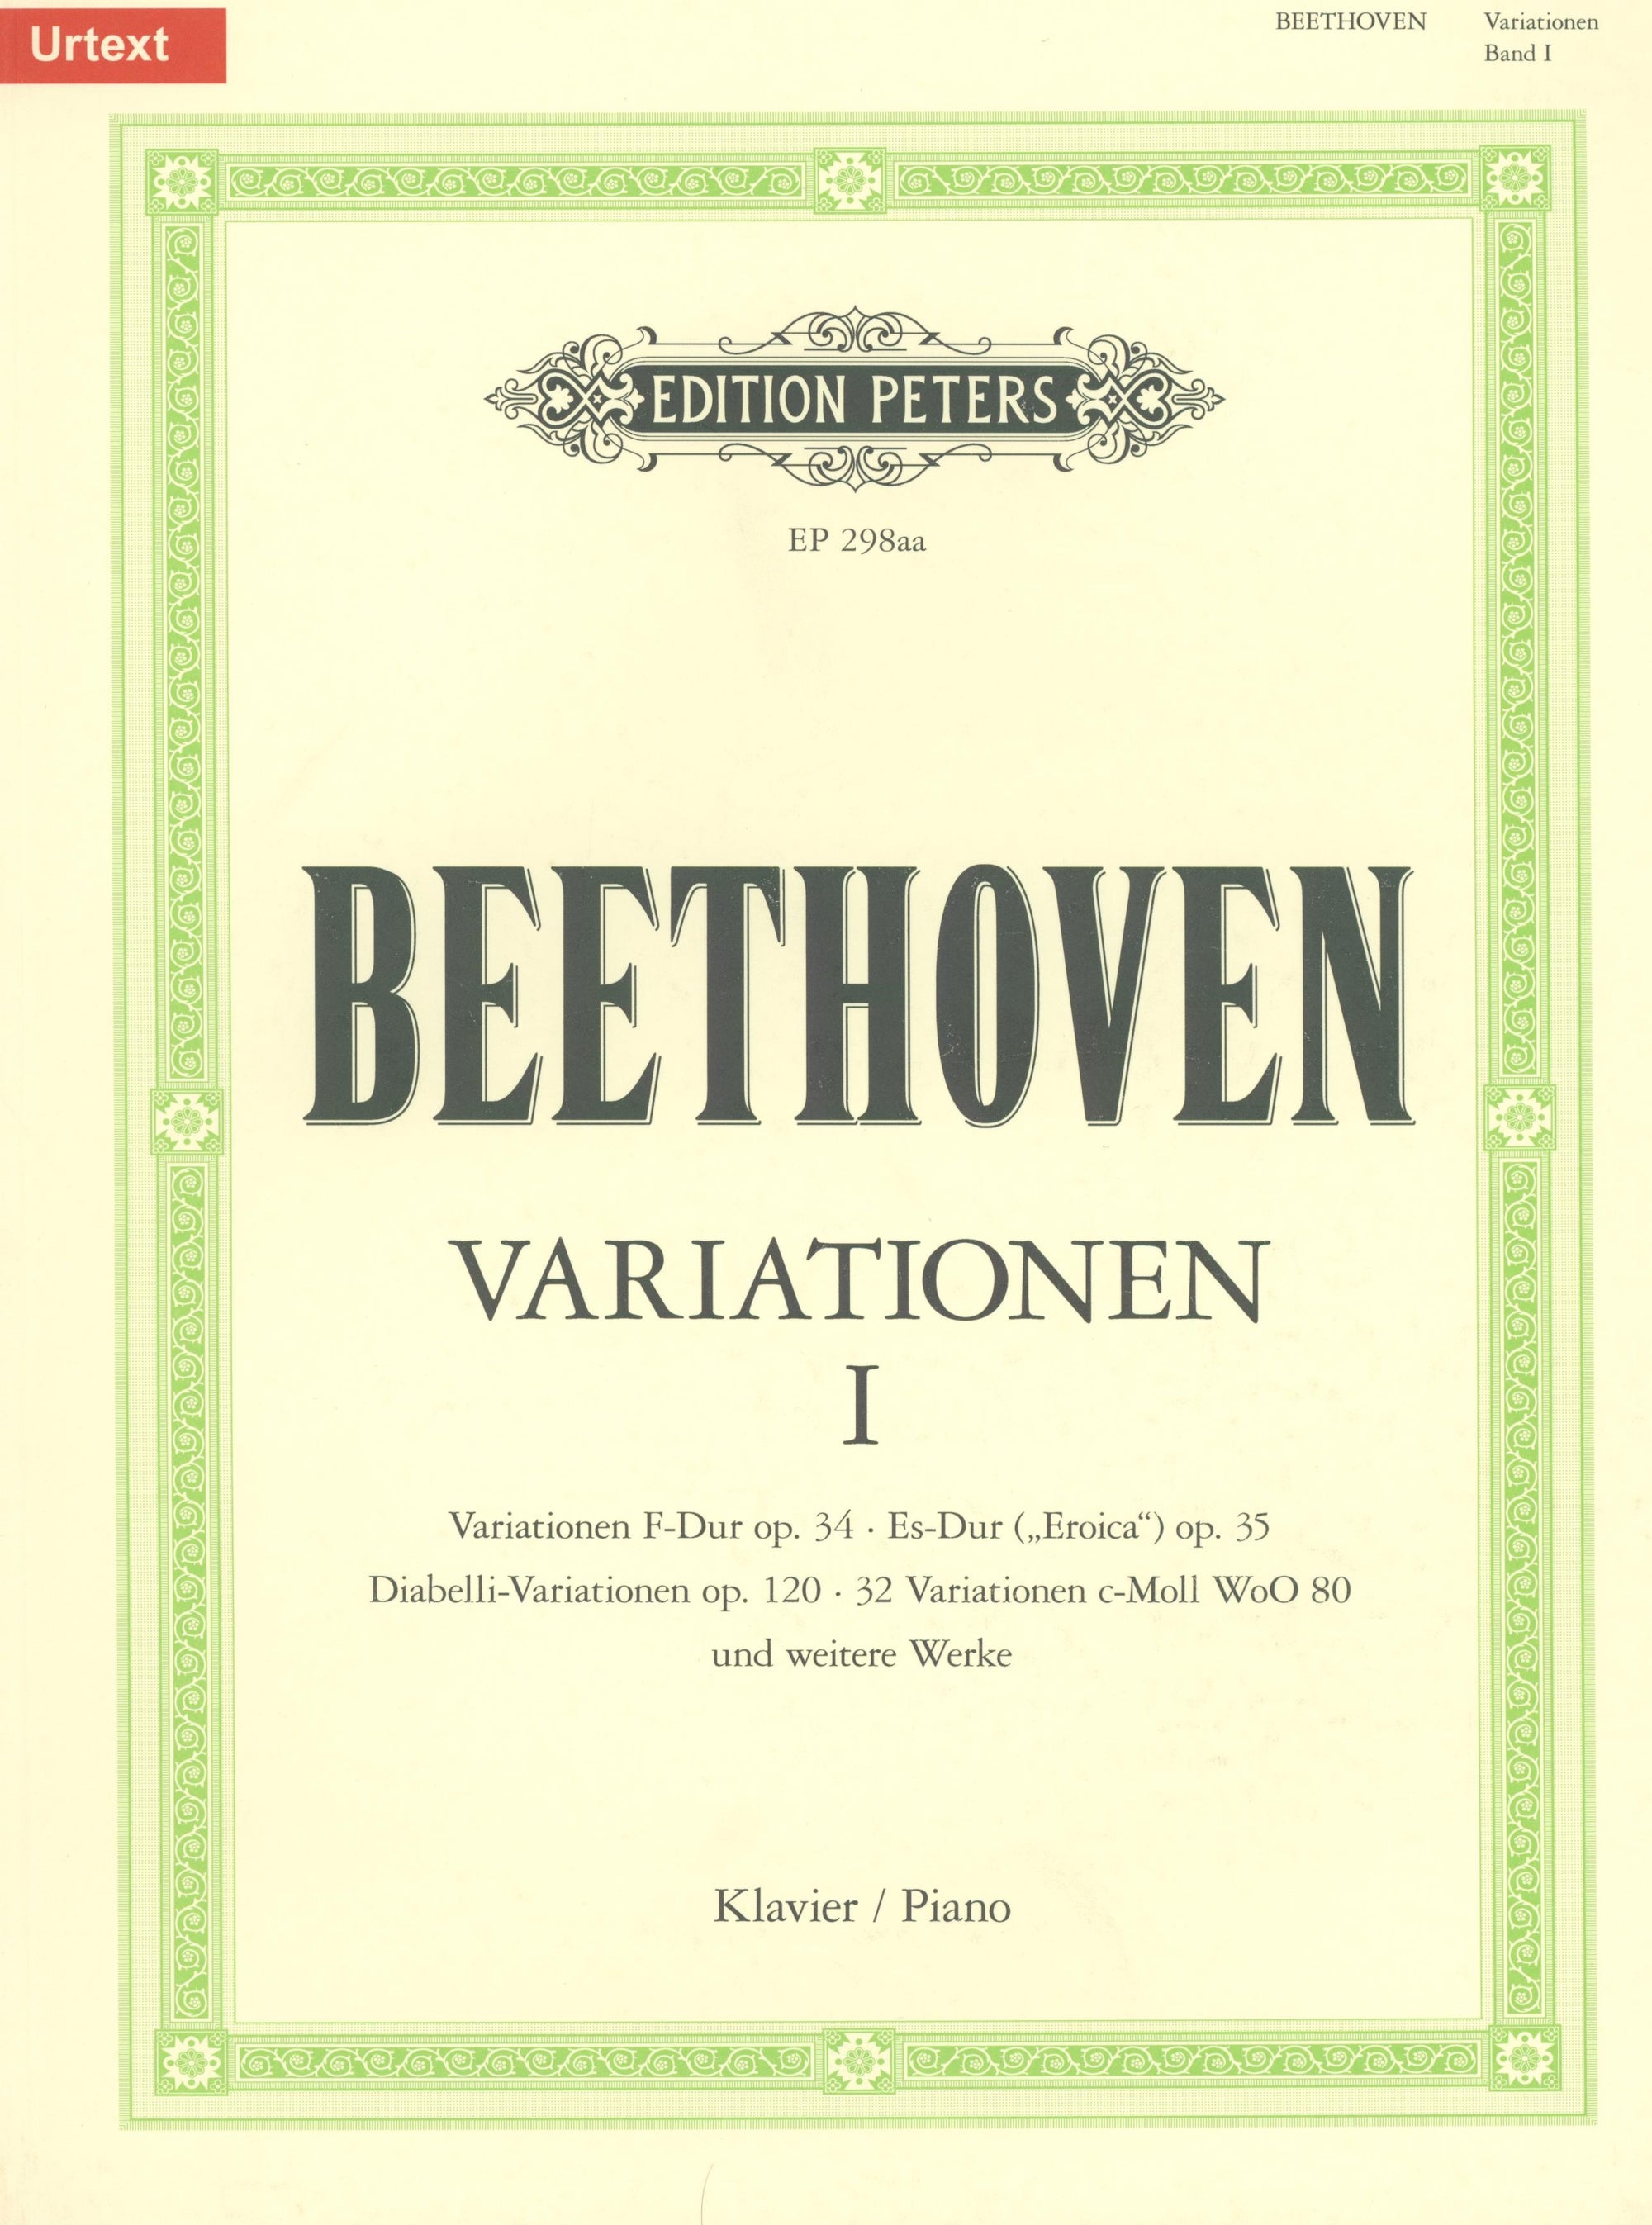 Beethoven: Complete Variations - Volume 1